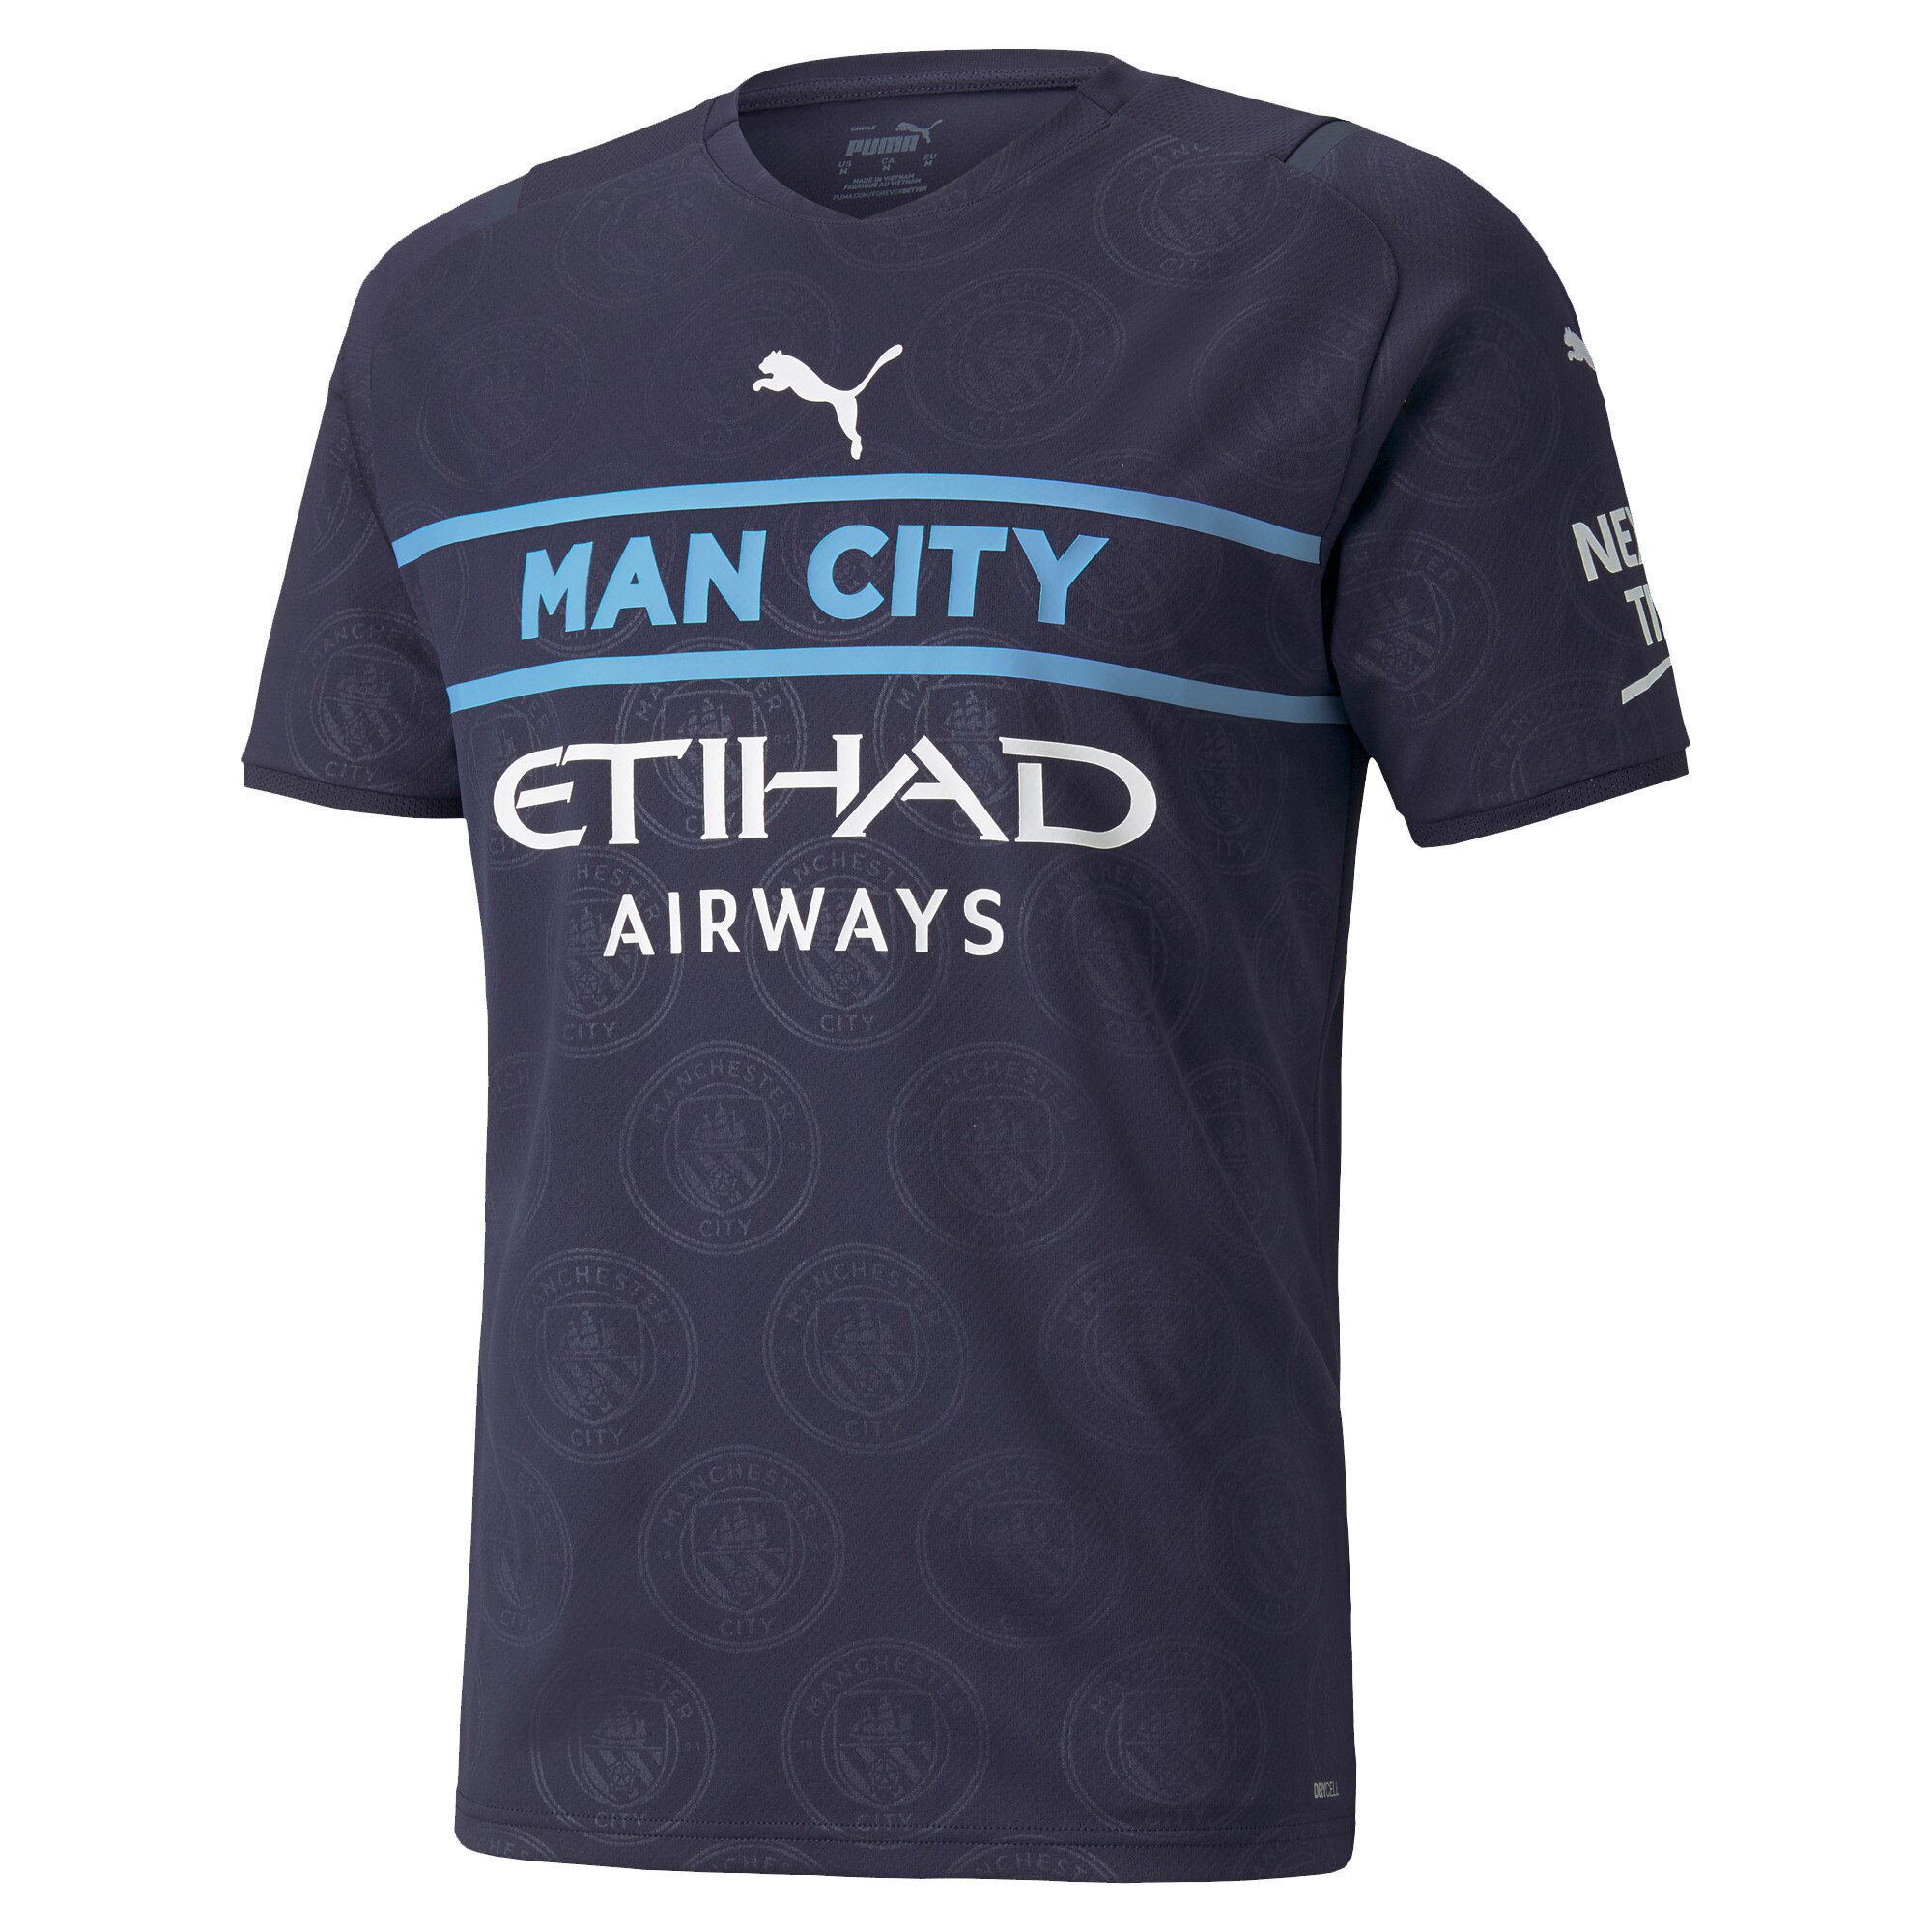 Manchester City Third Shirt 2021-22 with Fernandinho 25 printing